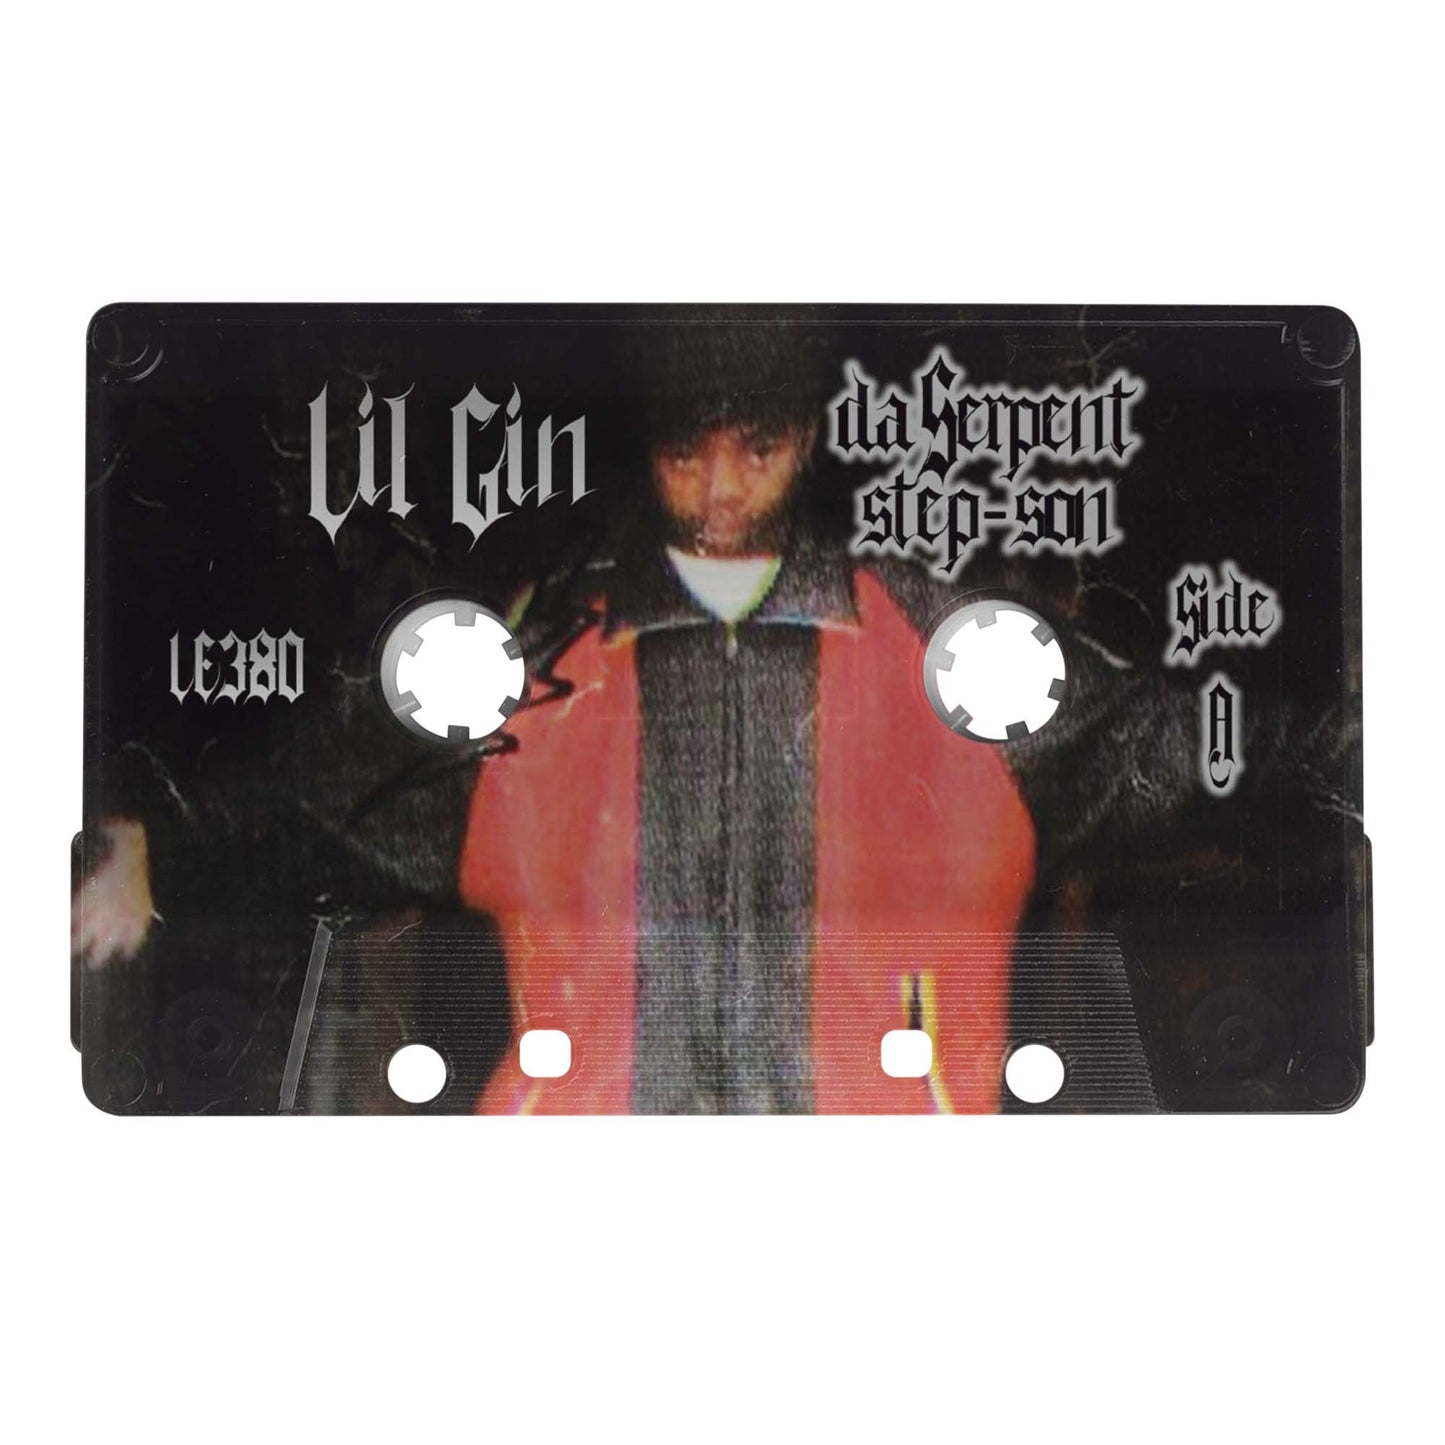 Lil Gin - "Kingpin Skinny Pimp presents: Da Serpent Stepson" Limited Edition Cassette Tape